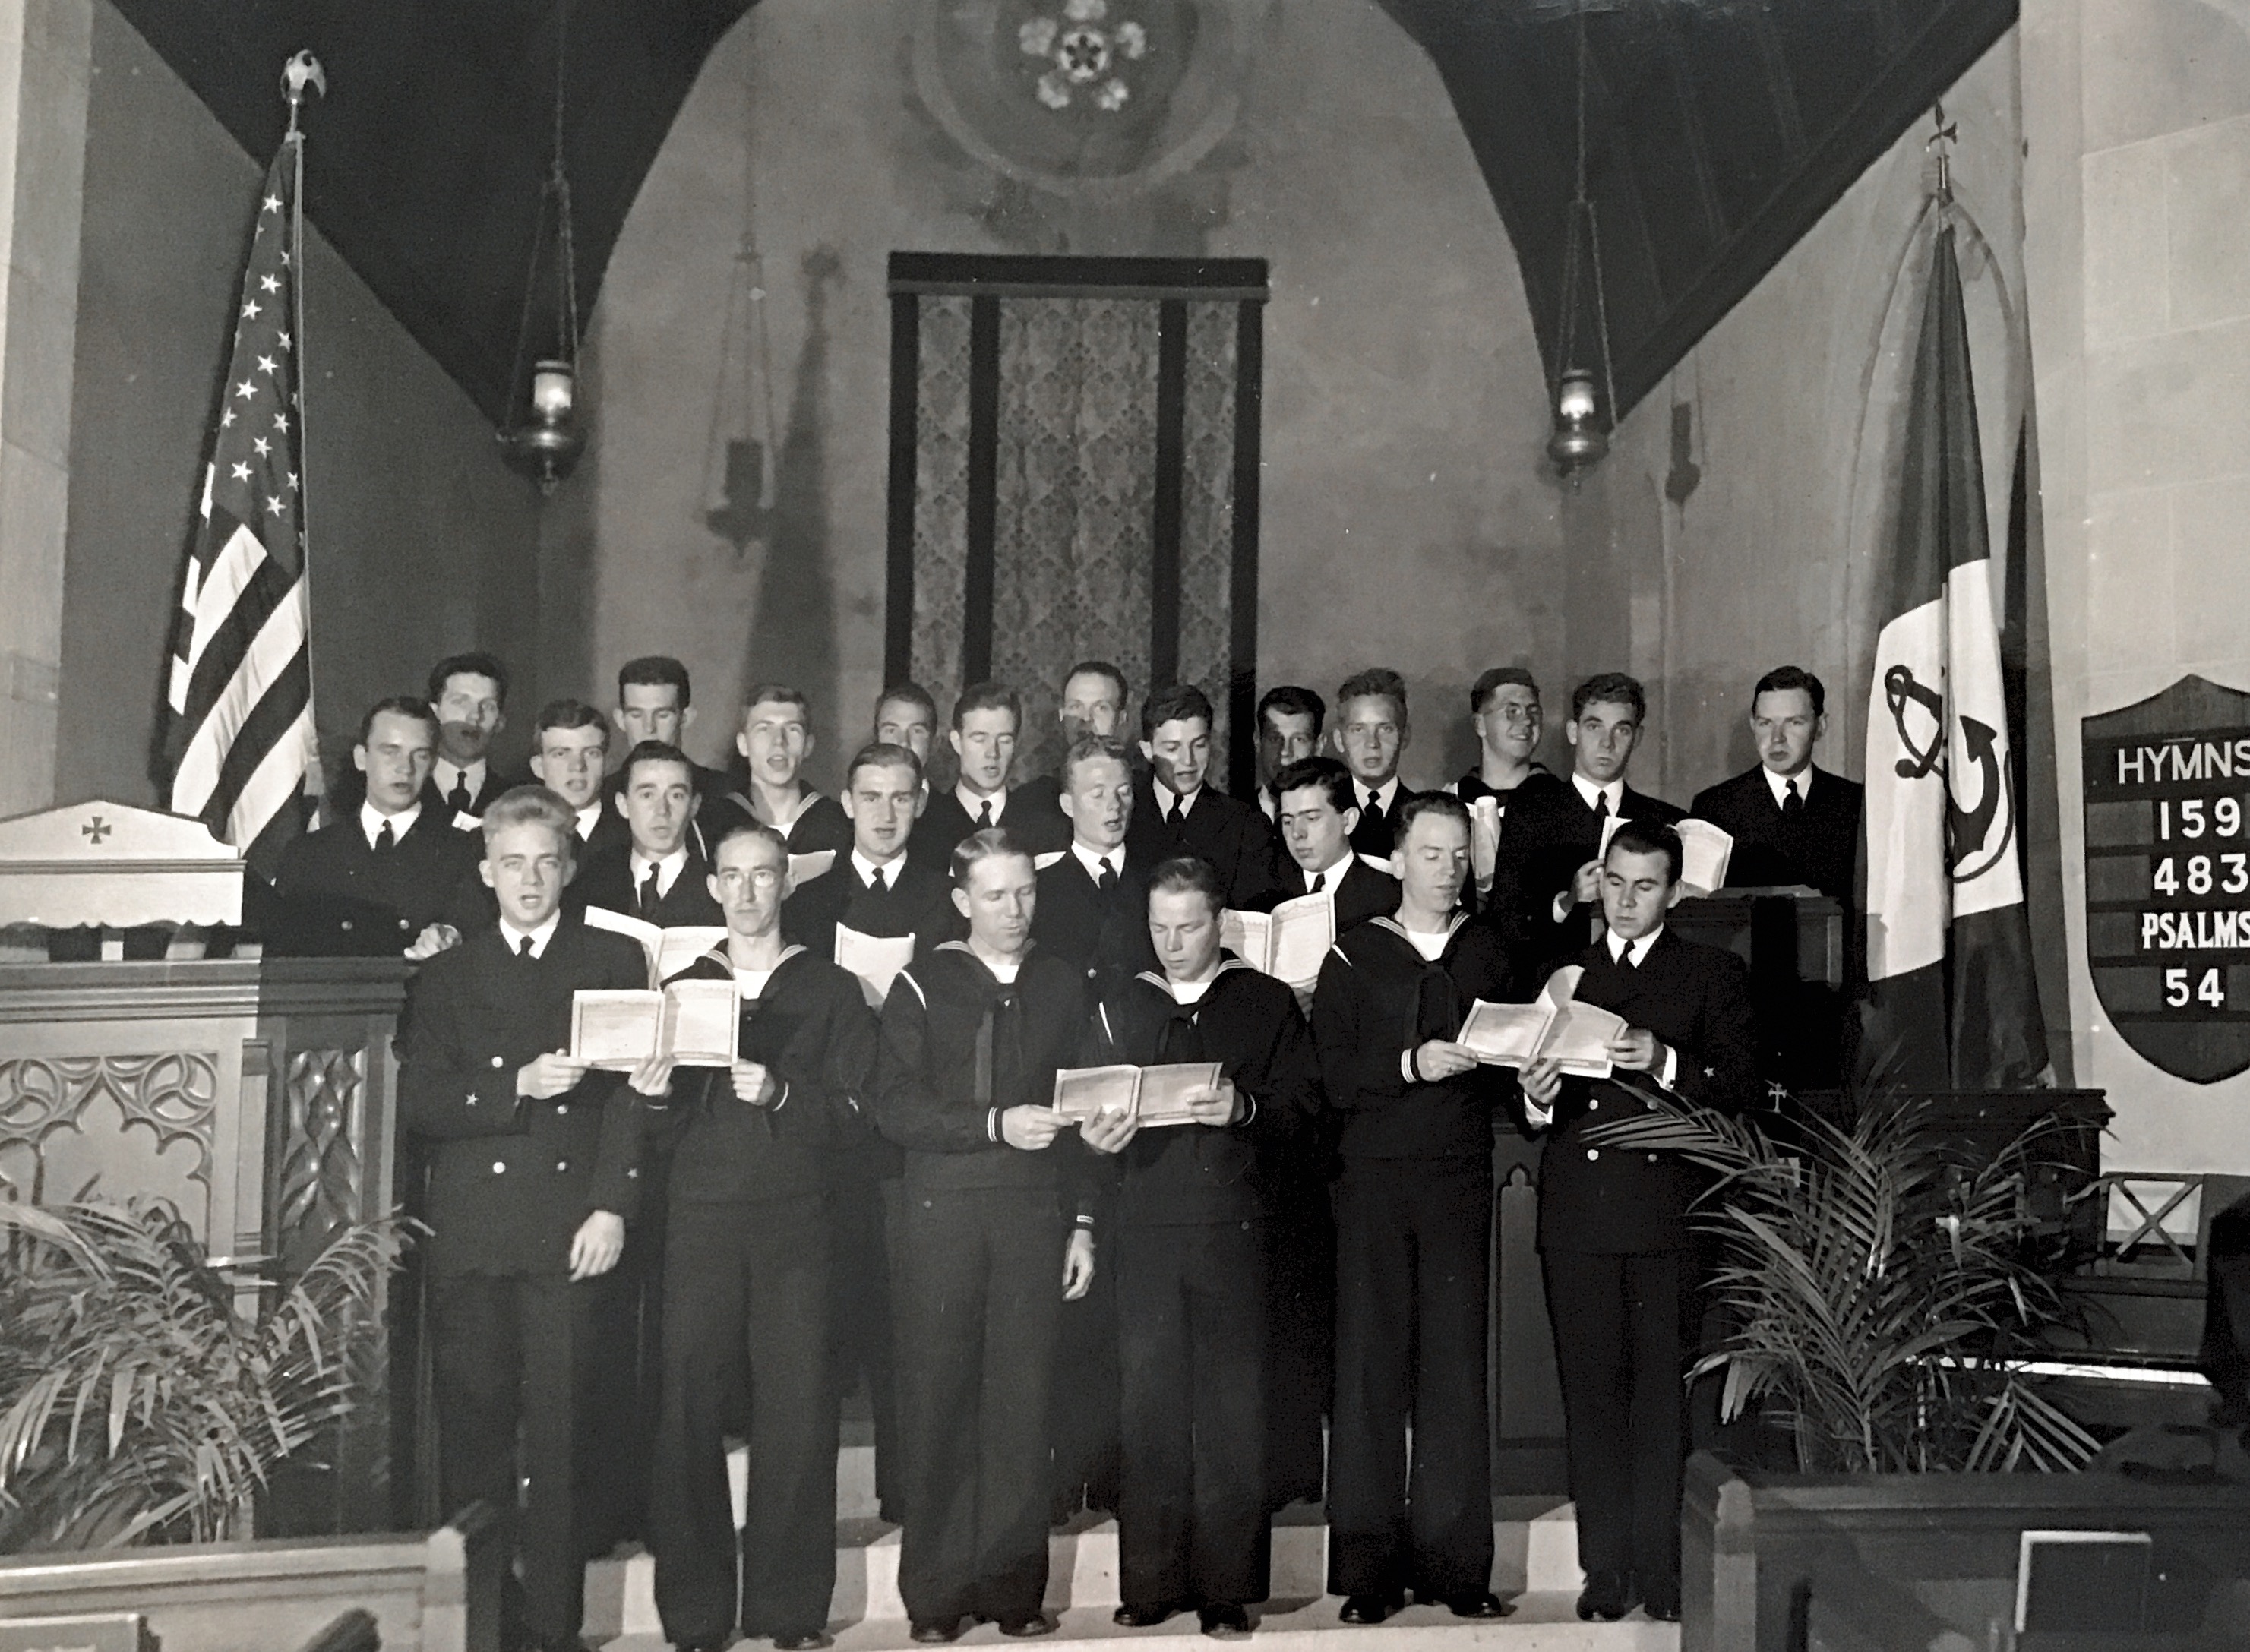 Cadet Choir Naval Air Station Lakehurst, NJ. 1942-1943
A.A.Elliott back row 4th from right